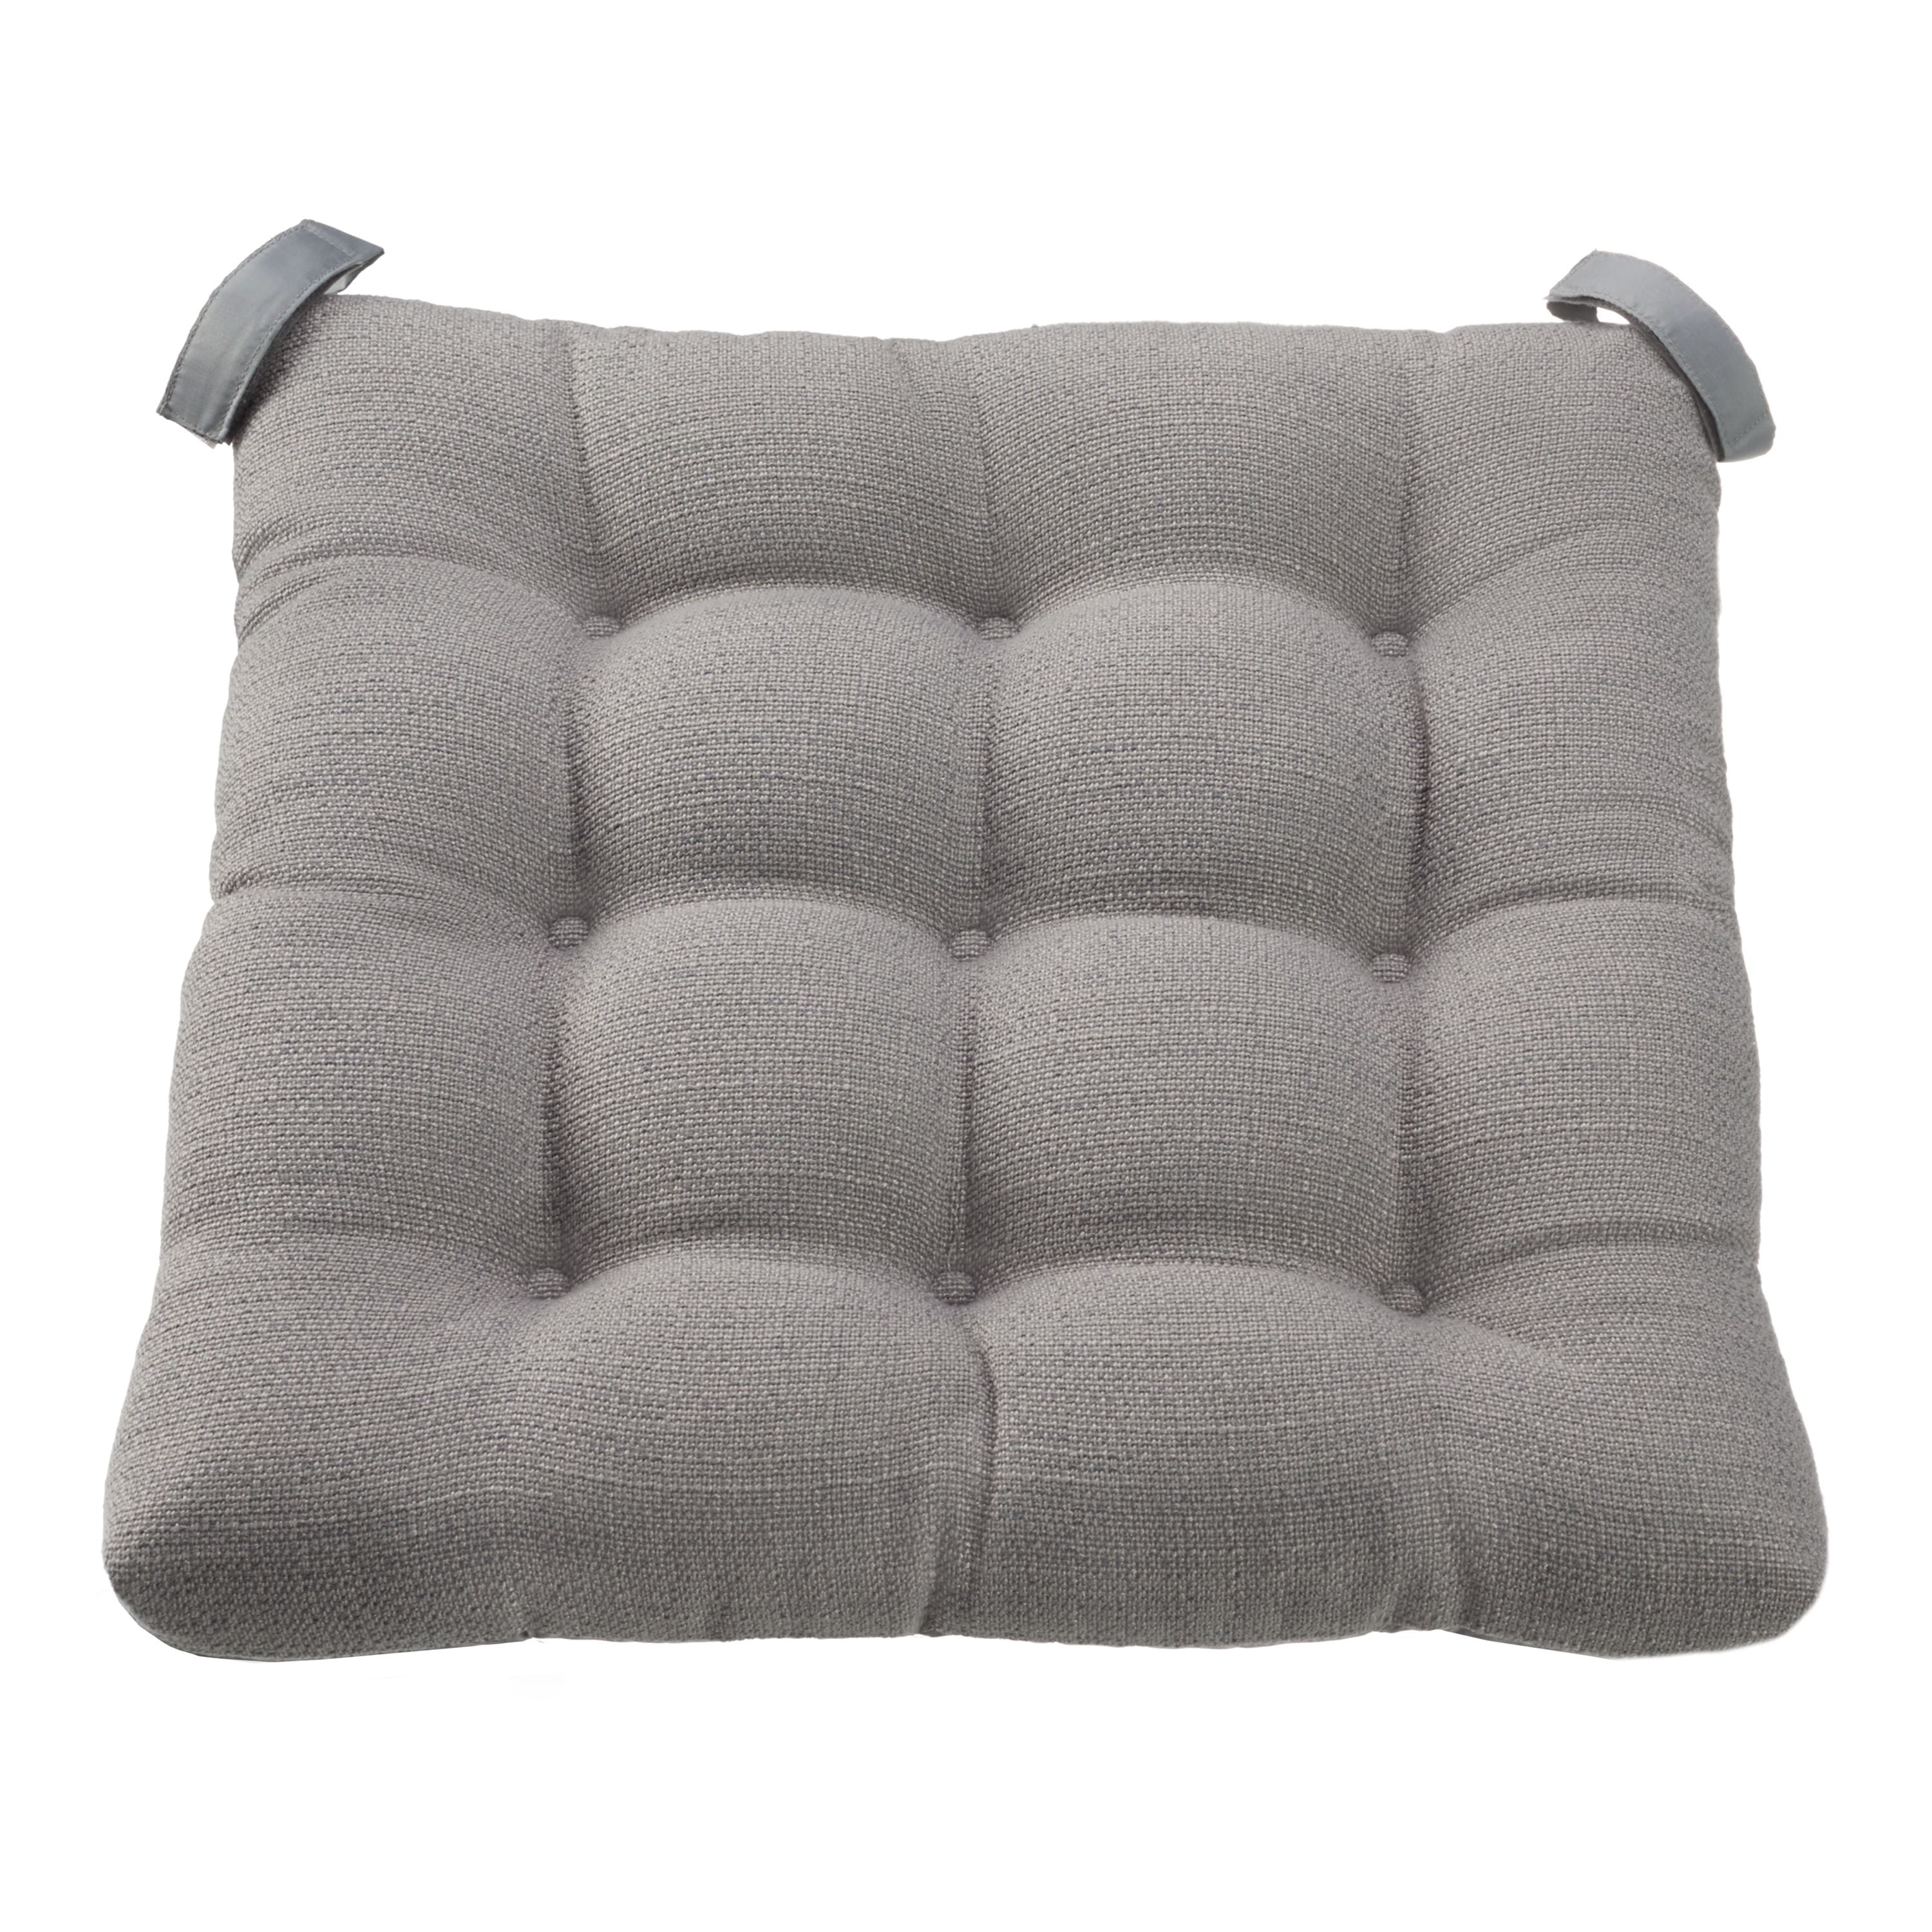 Mainstays Textured Chair Cushion, Gray, 1-Piece